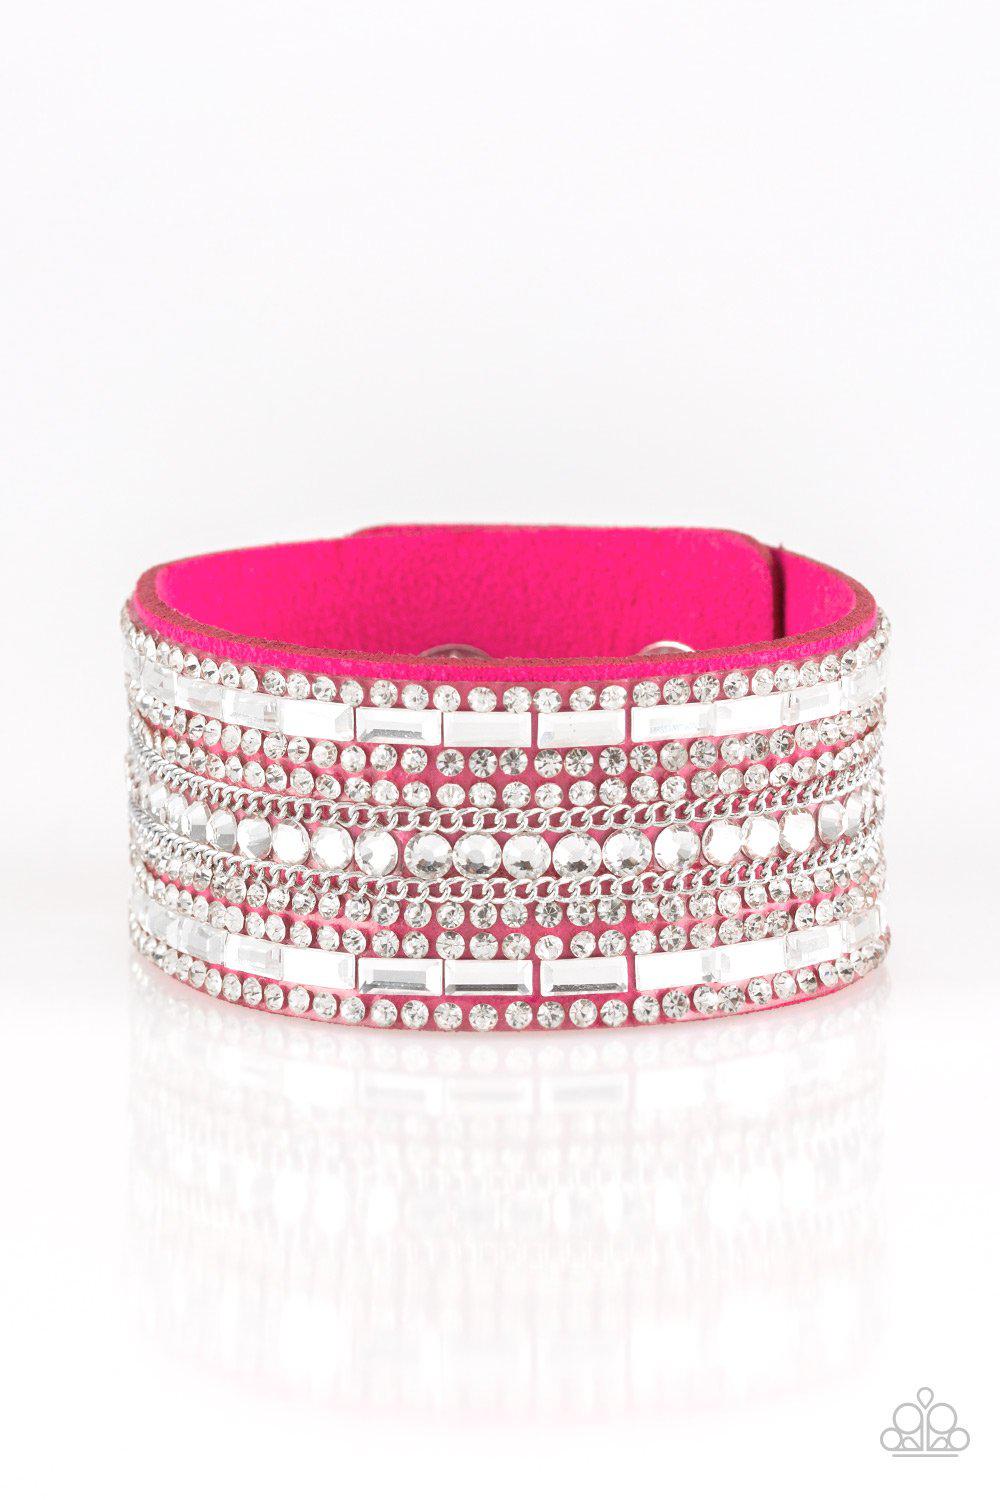 Rebel Radiance Pink and White Rhinestone Urban Wrap Snap Bracelet - Paparazzi Accessories-CarasShop.com - $5 Jewelry by Cara Jewels